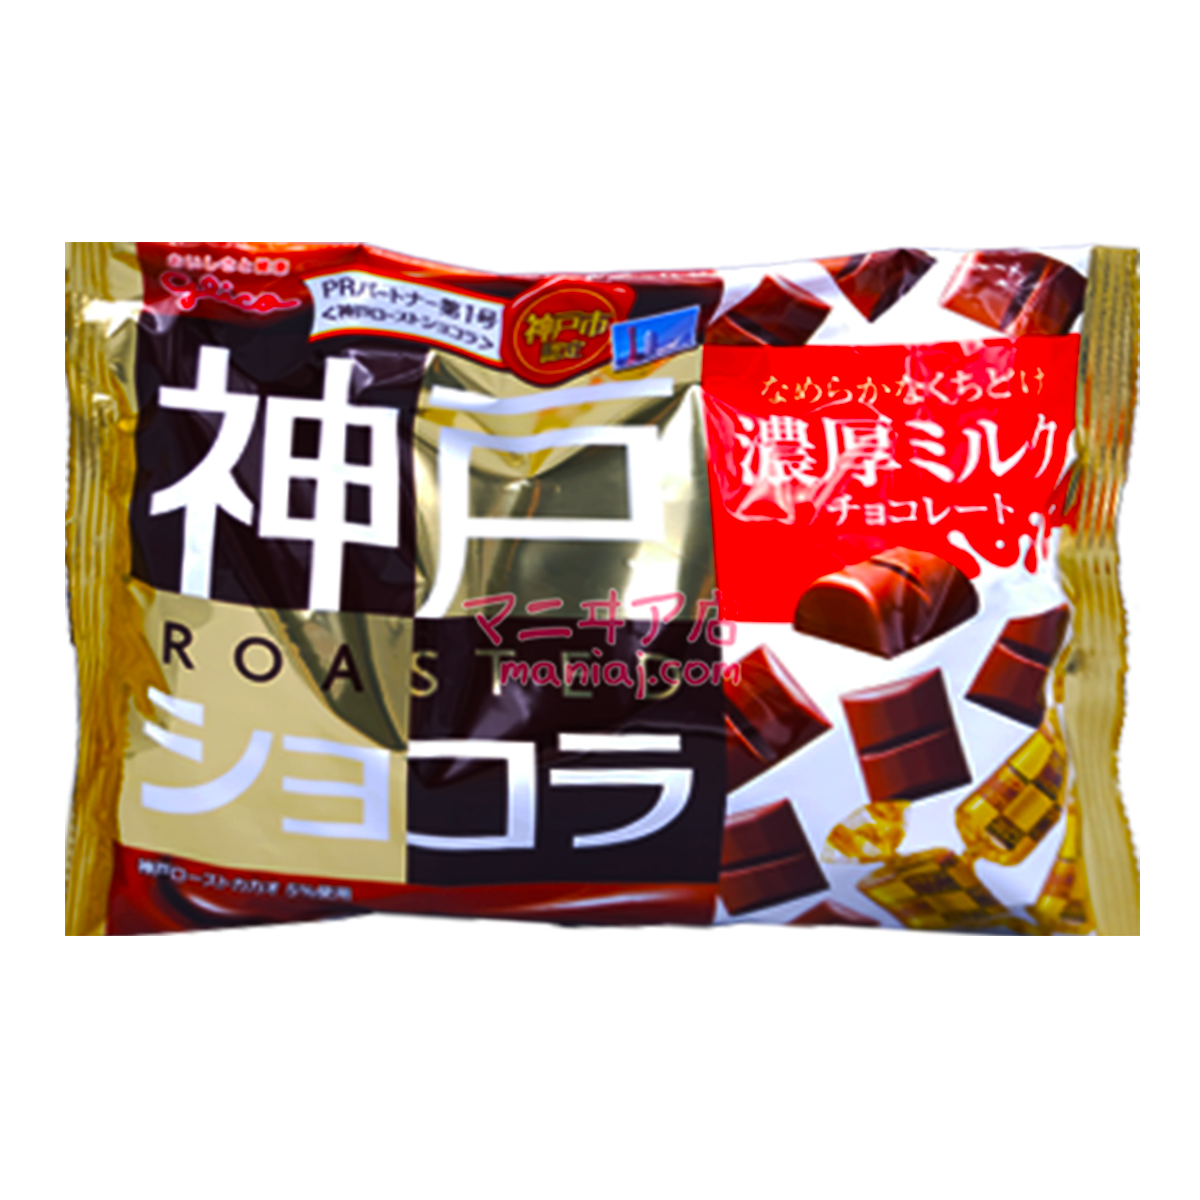 Kobe Roasted Rich Milk Chocolate